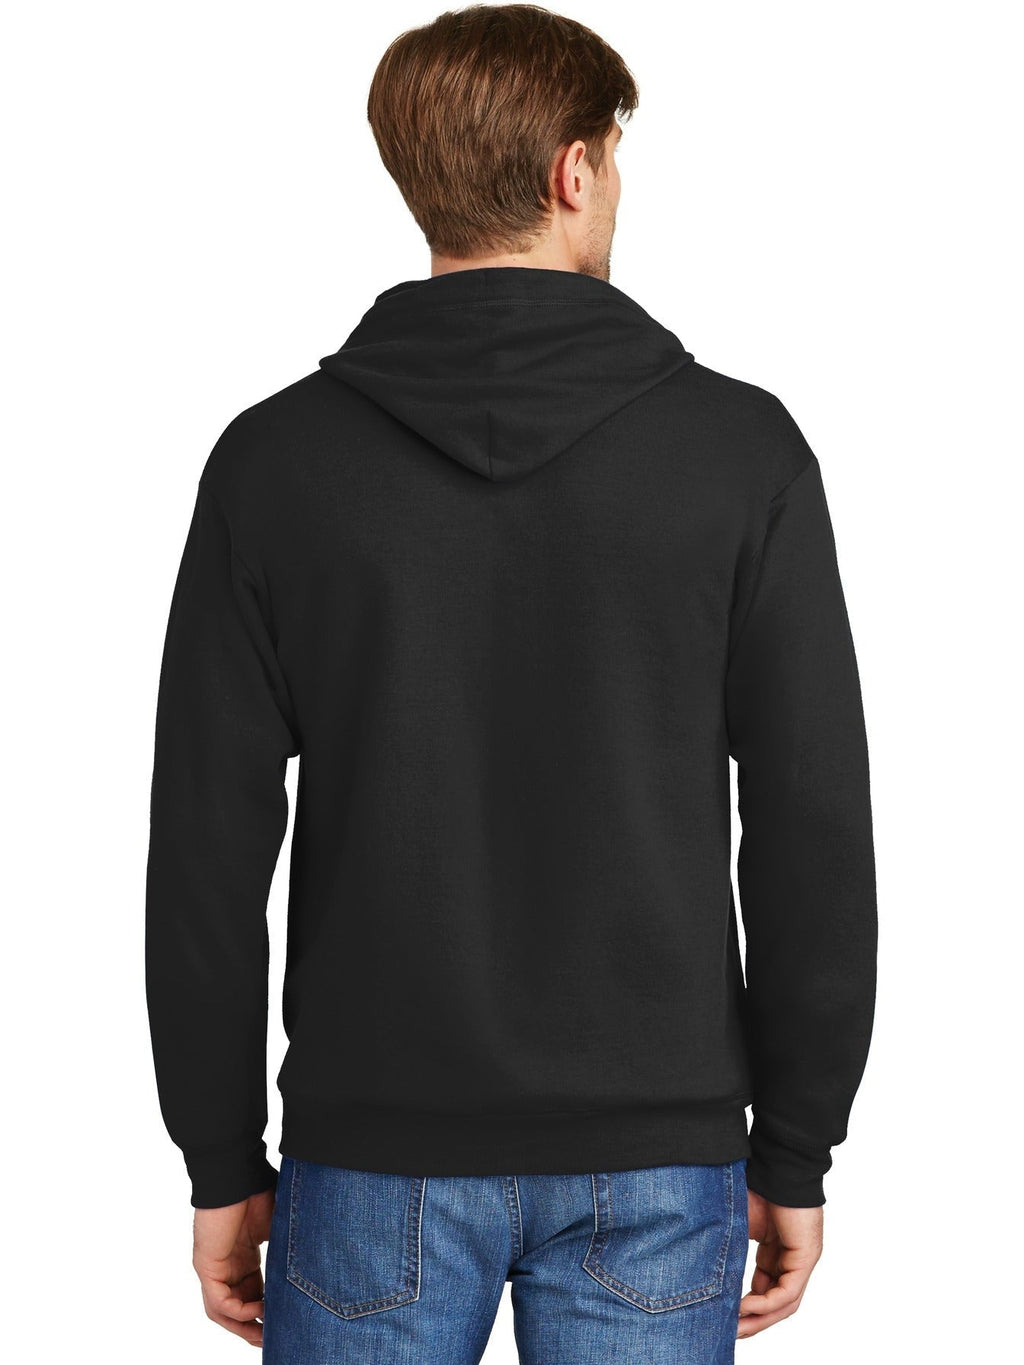 Hanes P180 Full-Zip Sweatshirt with Custom Embroidery